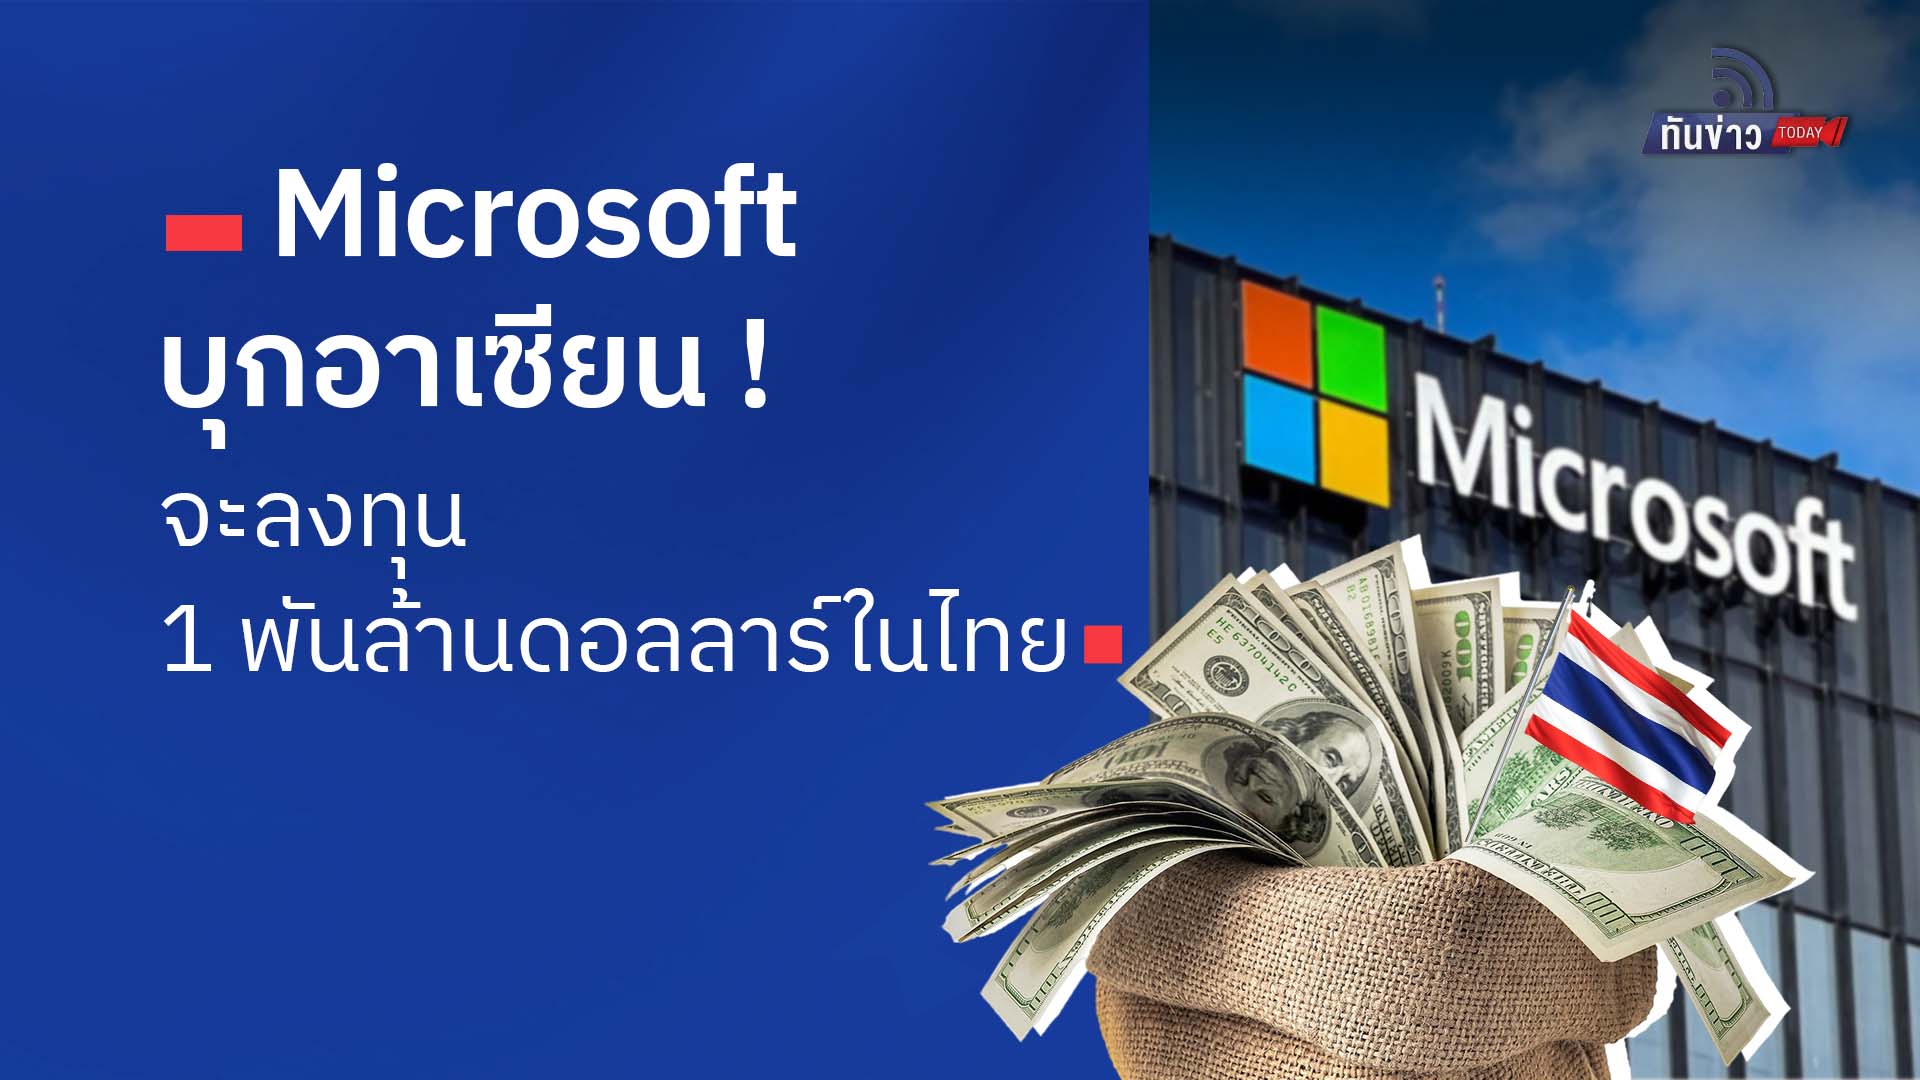 Microsoft บุกอาเซียน จะลงทุน 1 พันล้านดอลลาร์ในไทย